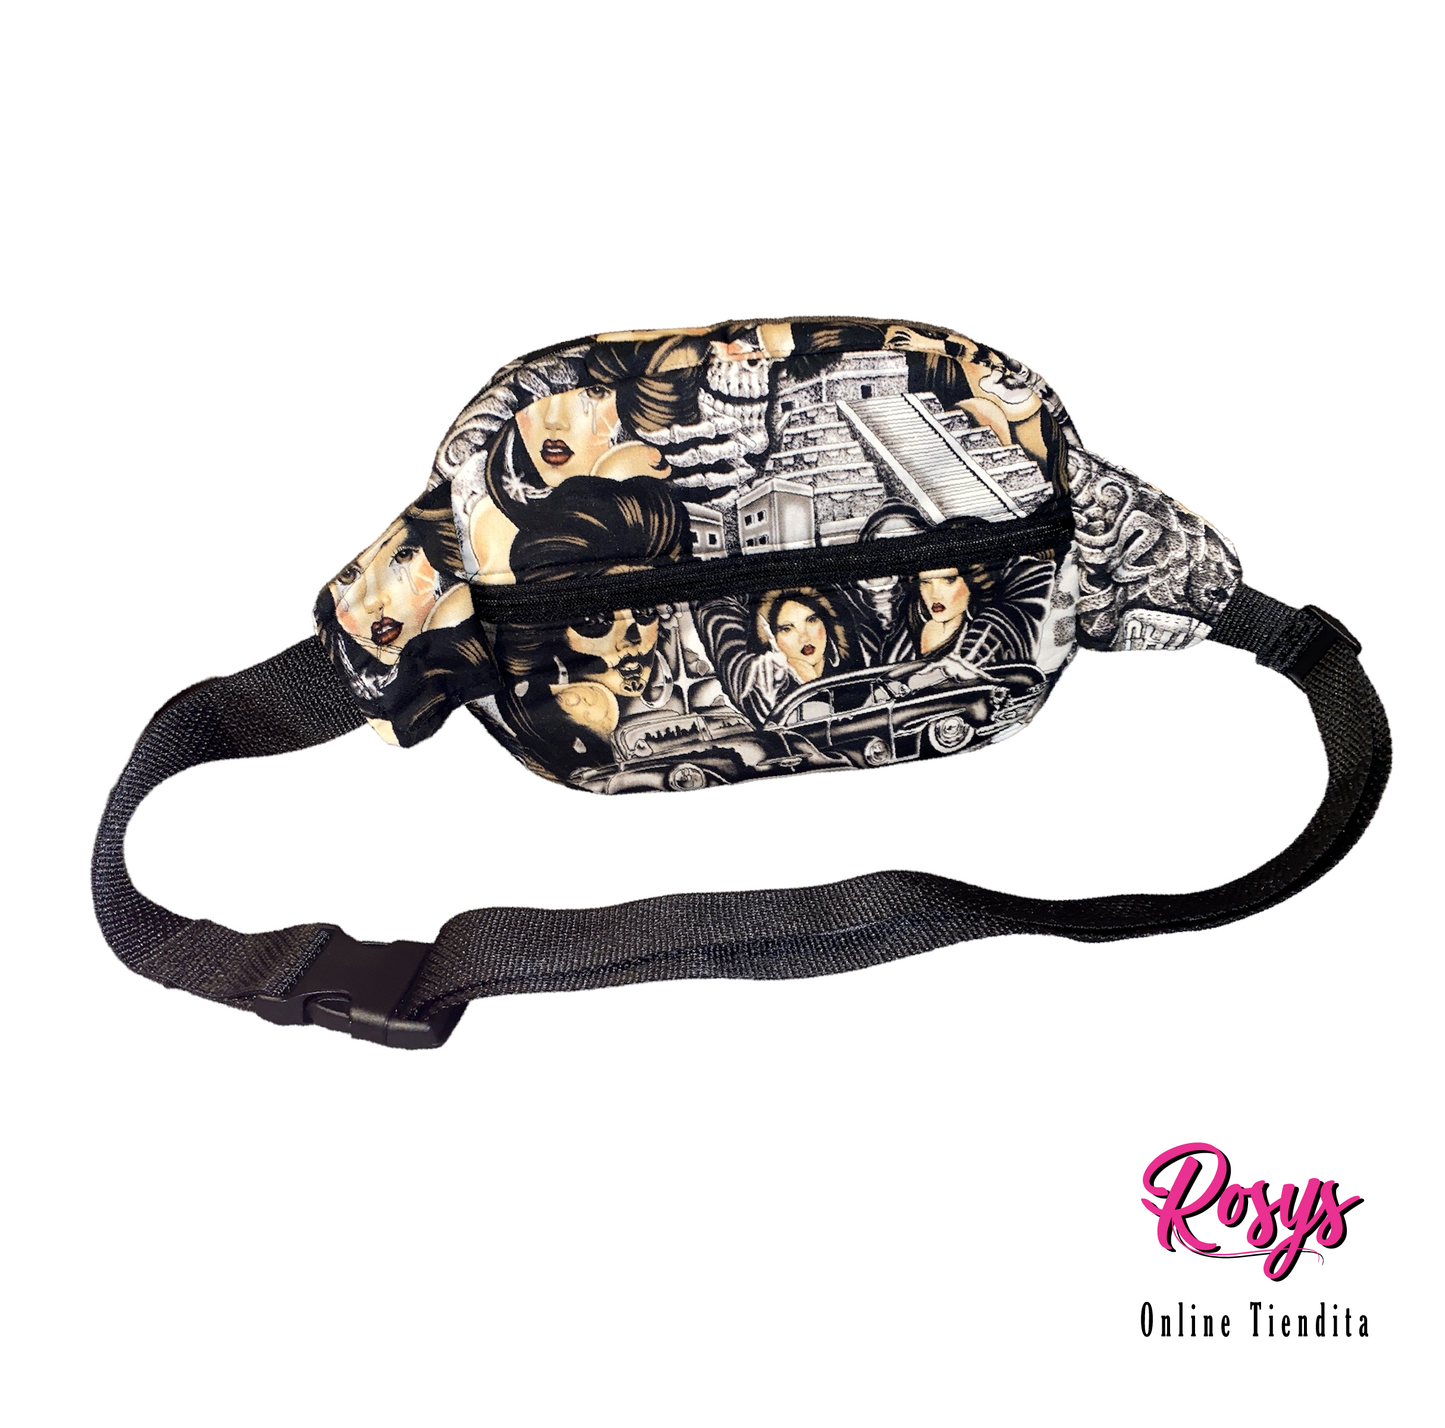 La Vida Belt Bag | Made By Rosy!